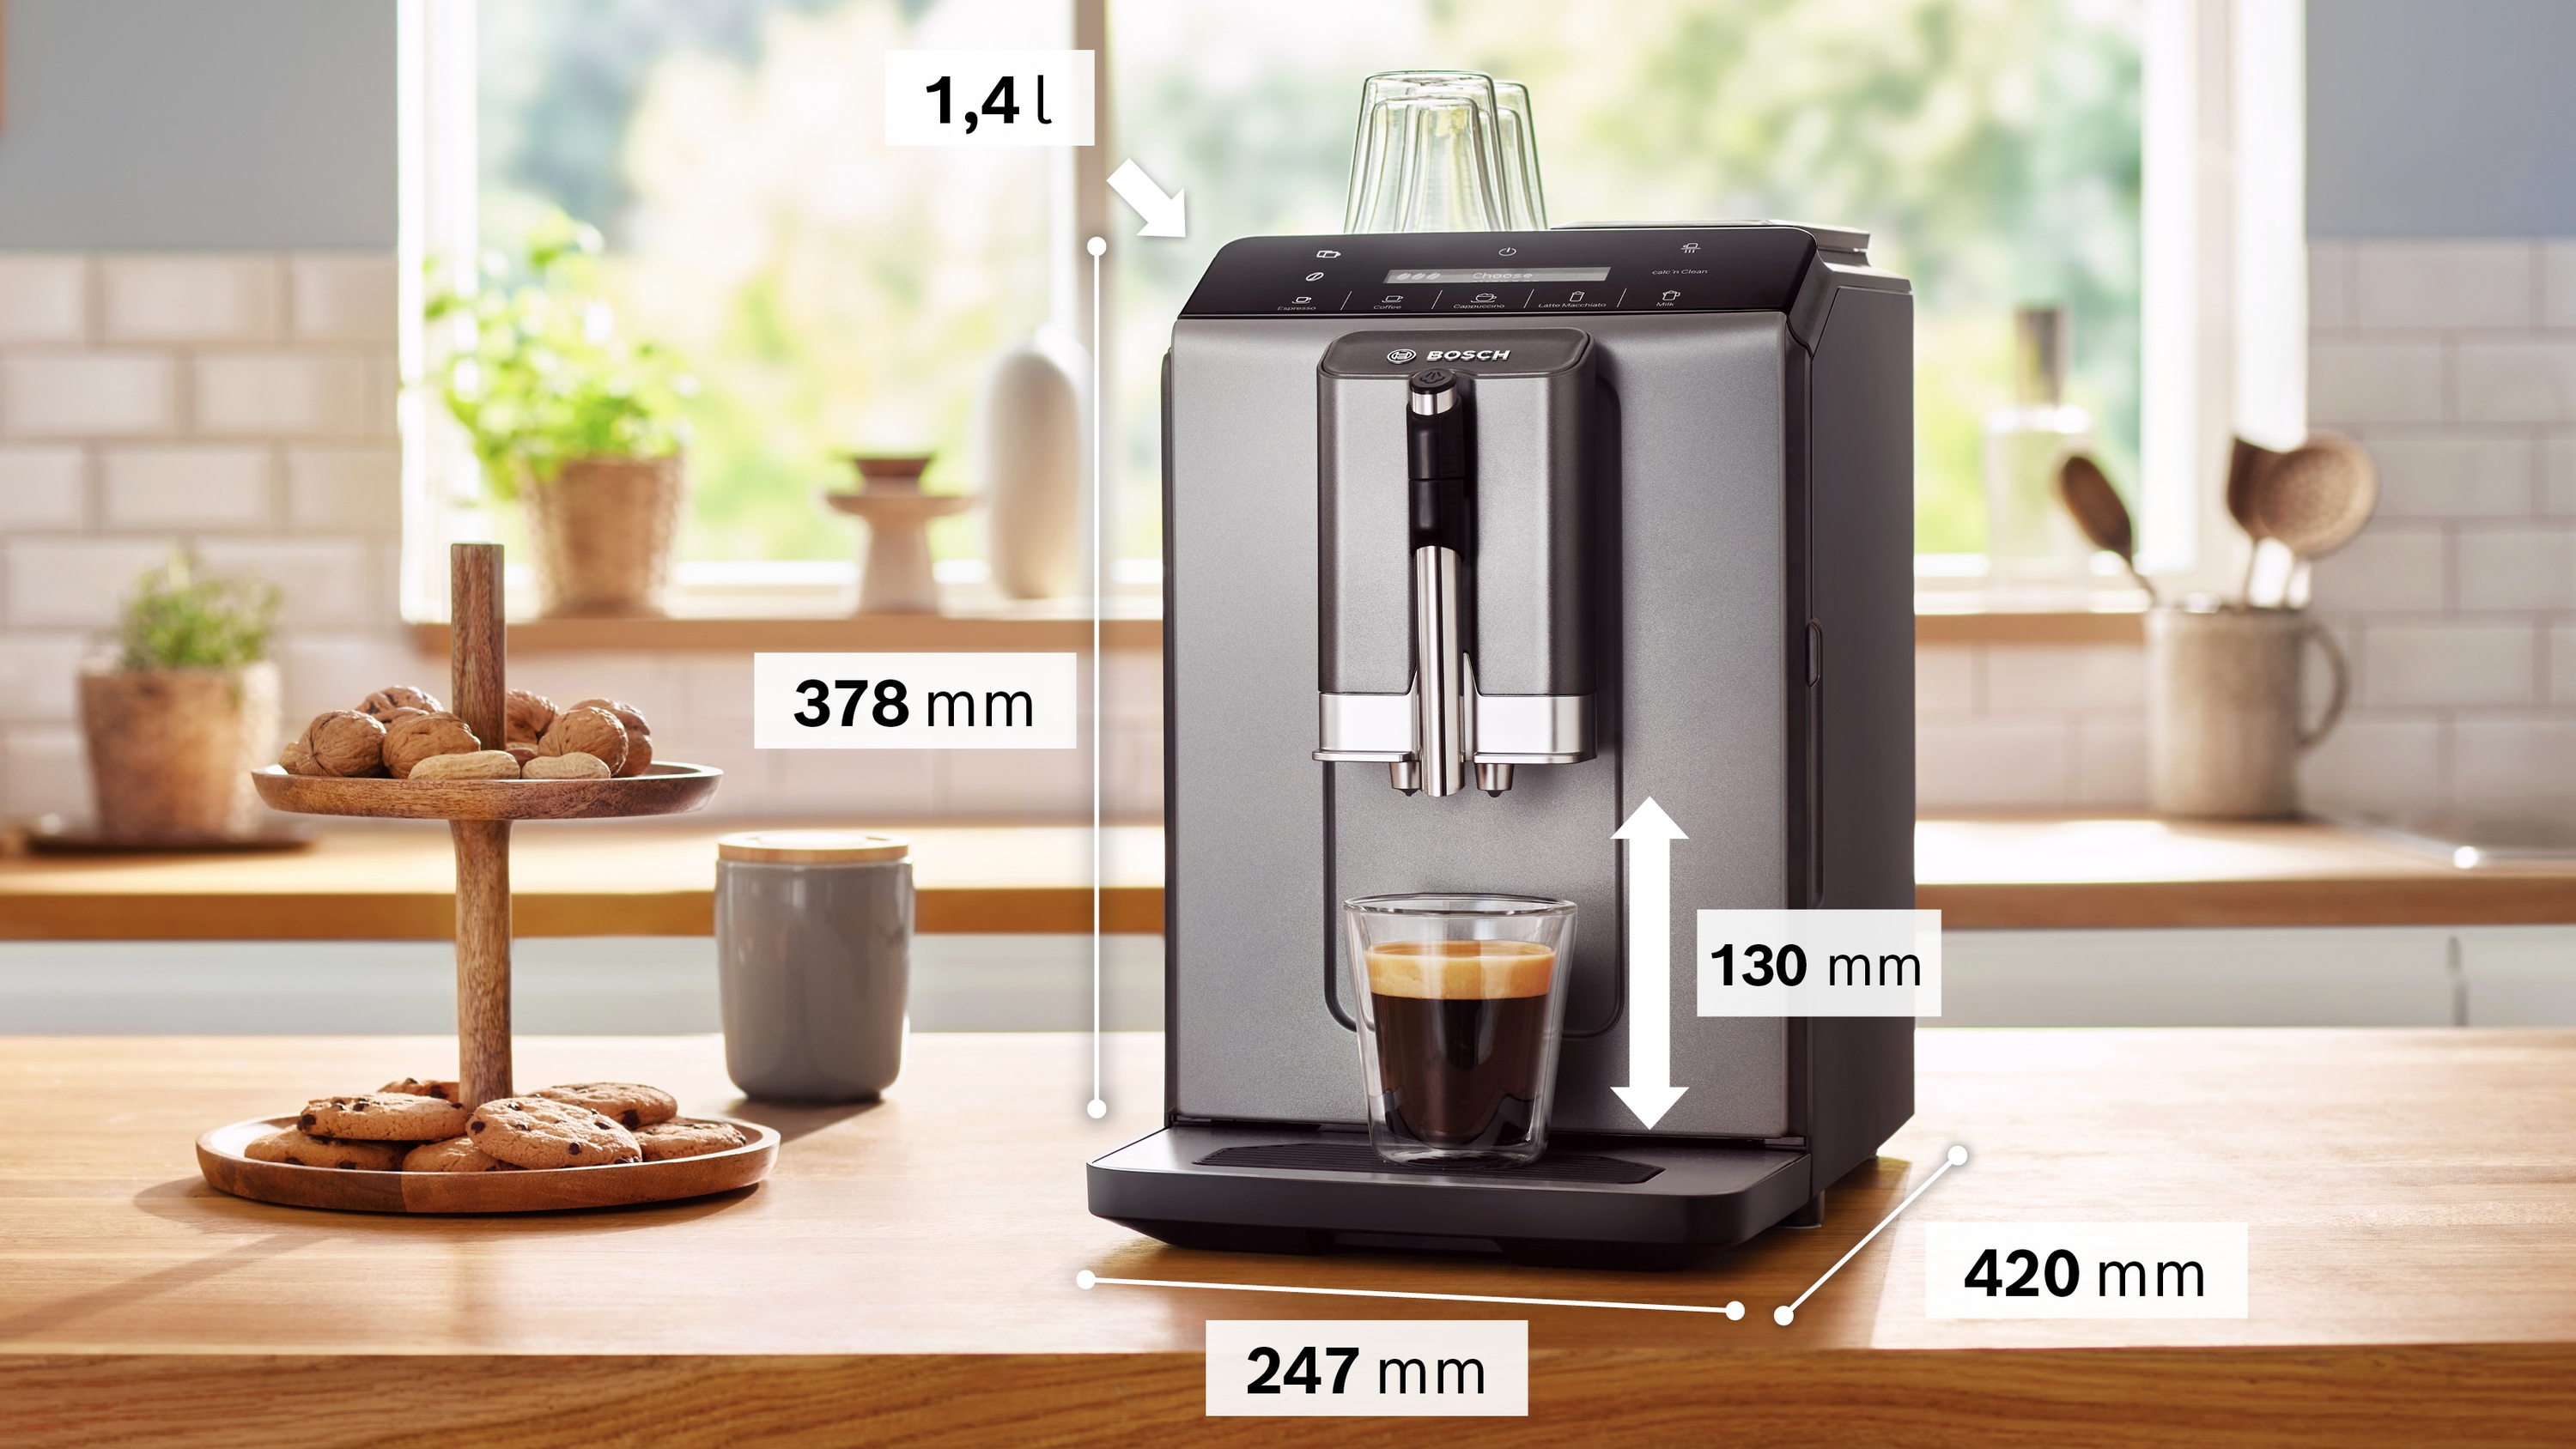 Fully automatic coffee machine, Serie 2 VeroCafe, Diamond titanium metallic, TIE20504